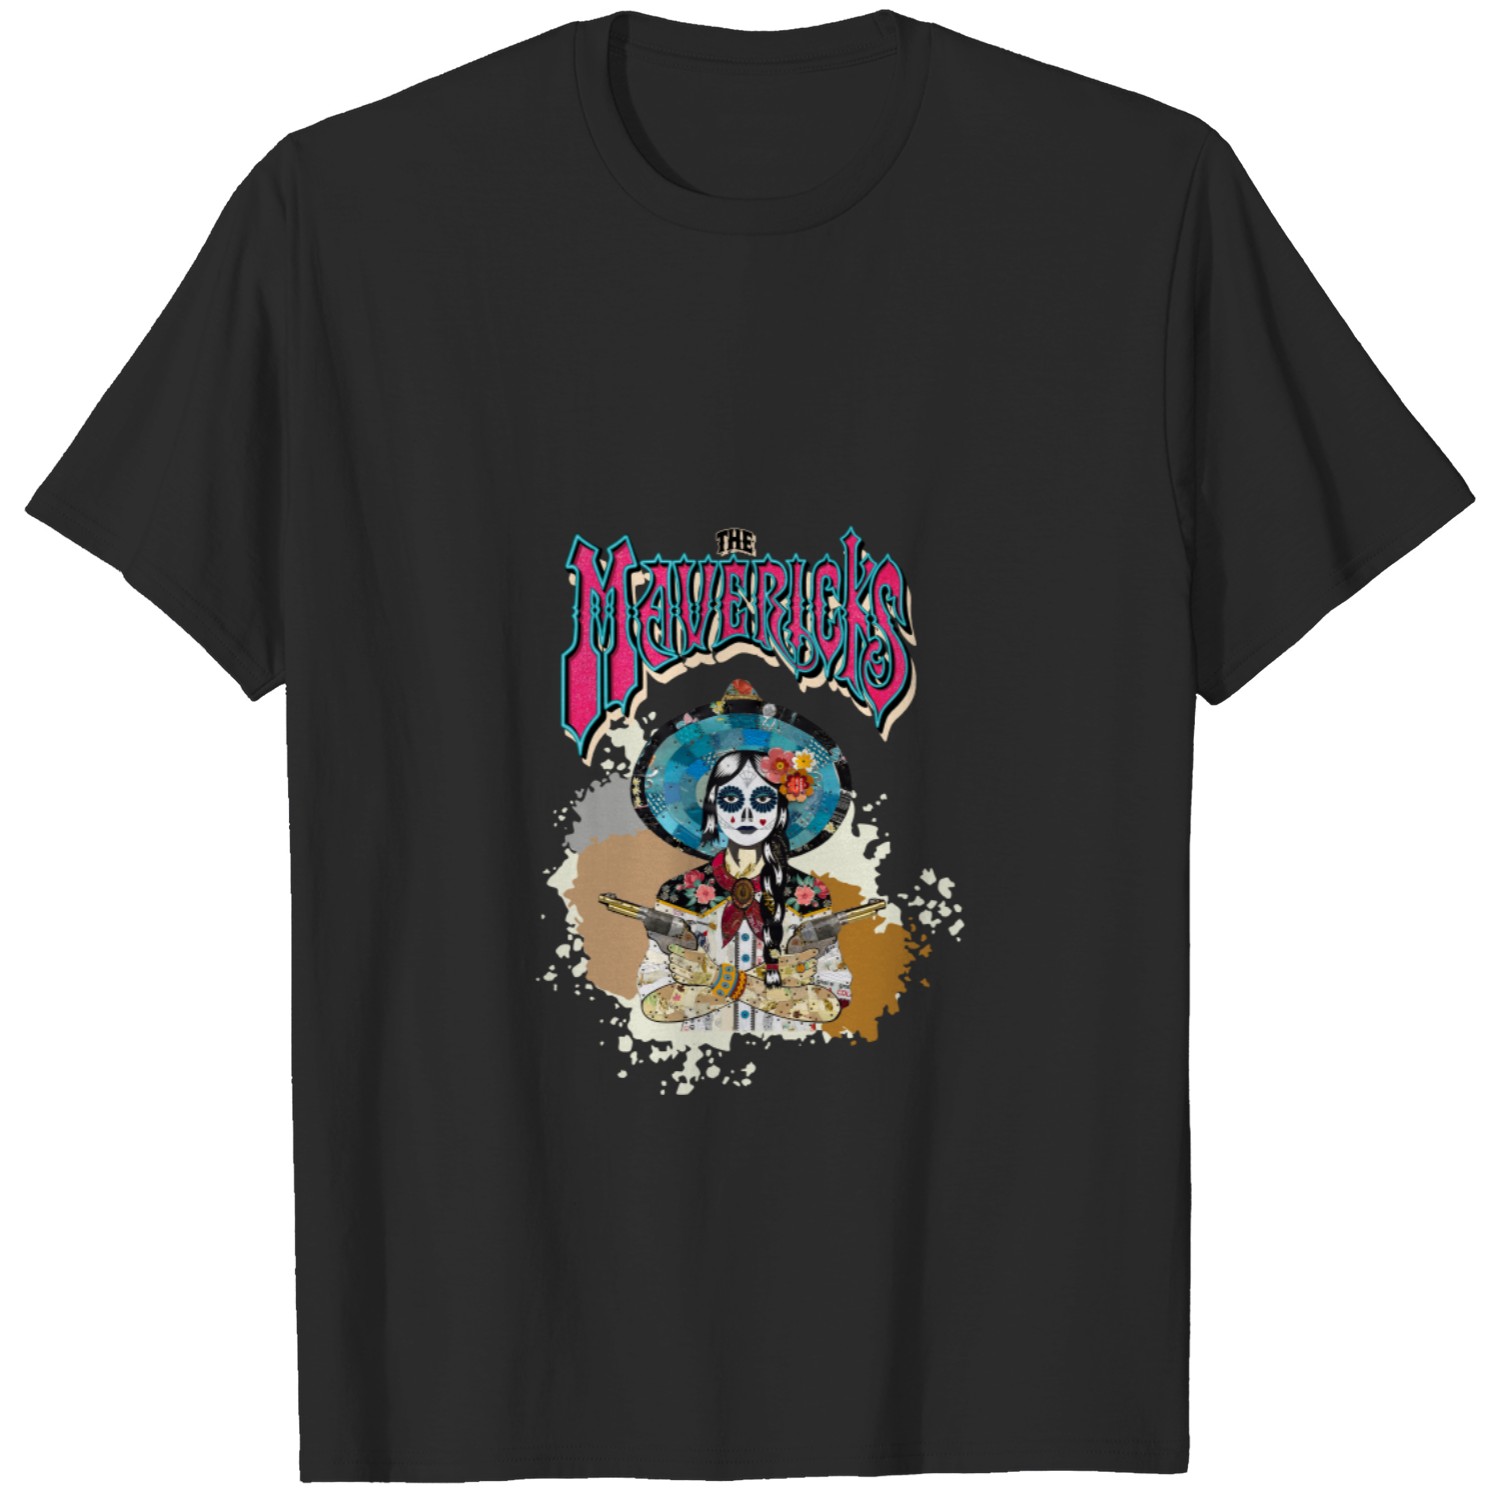 The Mavericks Music Band Shirt Art In Concert Tour Sweatshirt